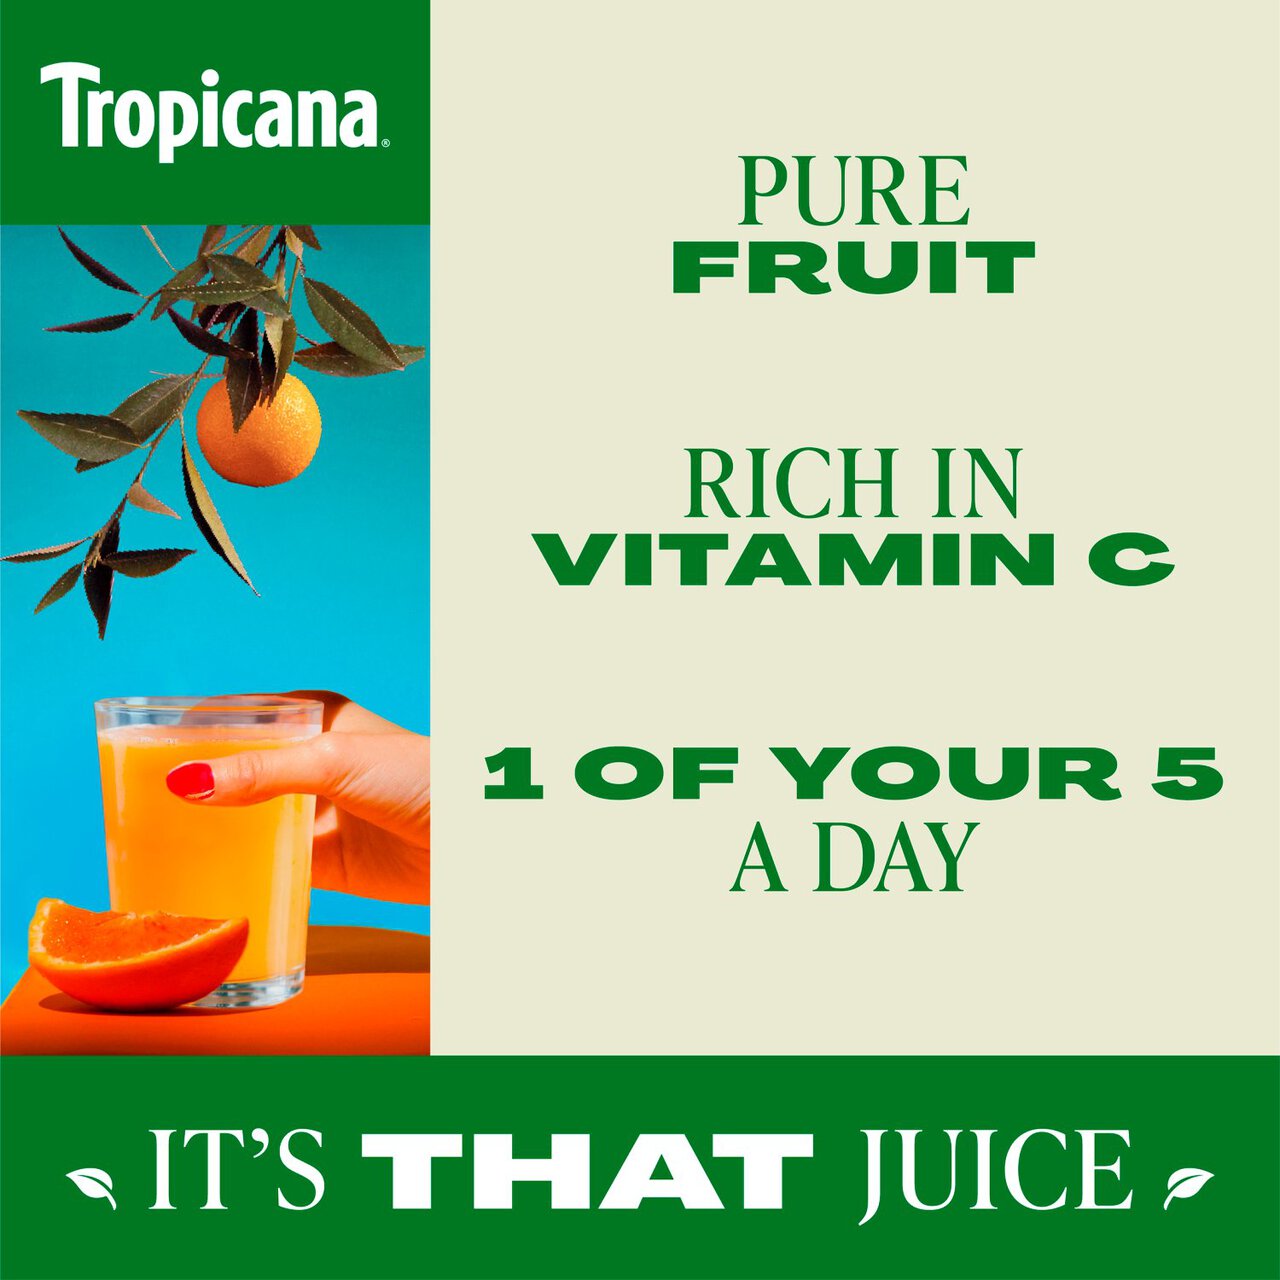 Tropicana Pure Orange & Mango Fruit Juice 850ml